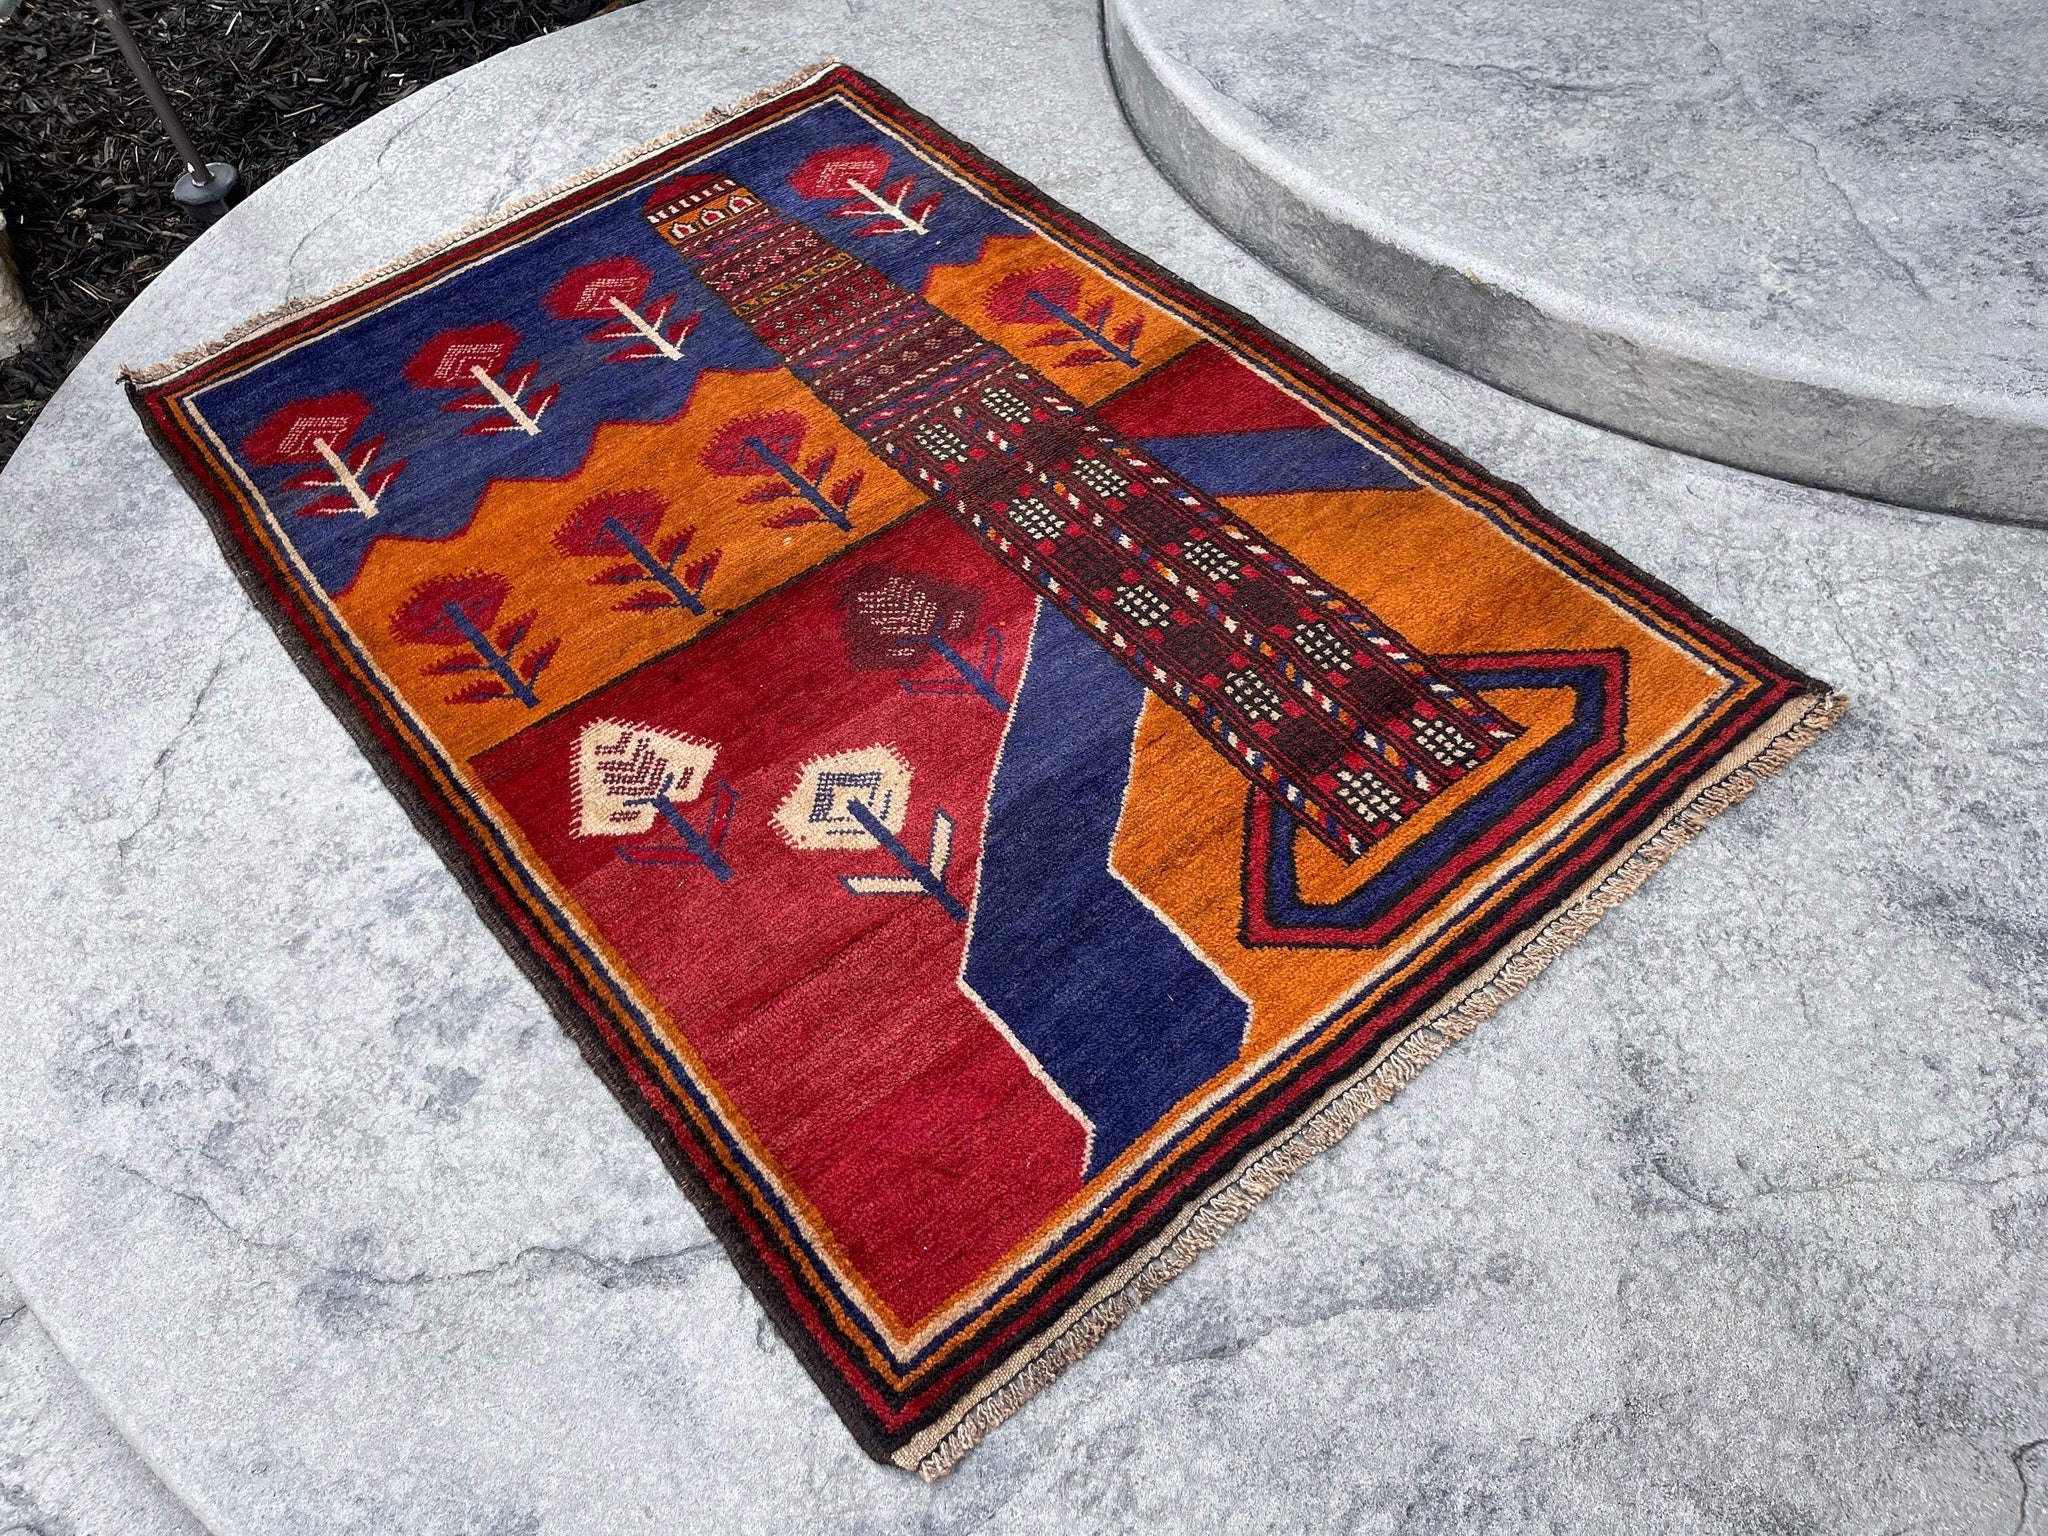 3x5 (90x150) Handmade Vintage Afghan Pictorial Rug| Saffron Rust Orange Blue Red | Nomadic Baluch Boho Bohemian Tribal Turkish Moroccan Wool